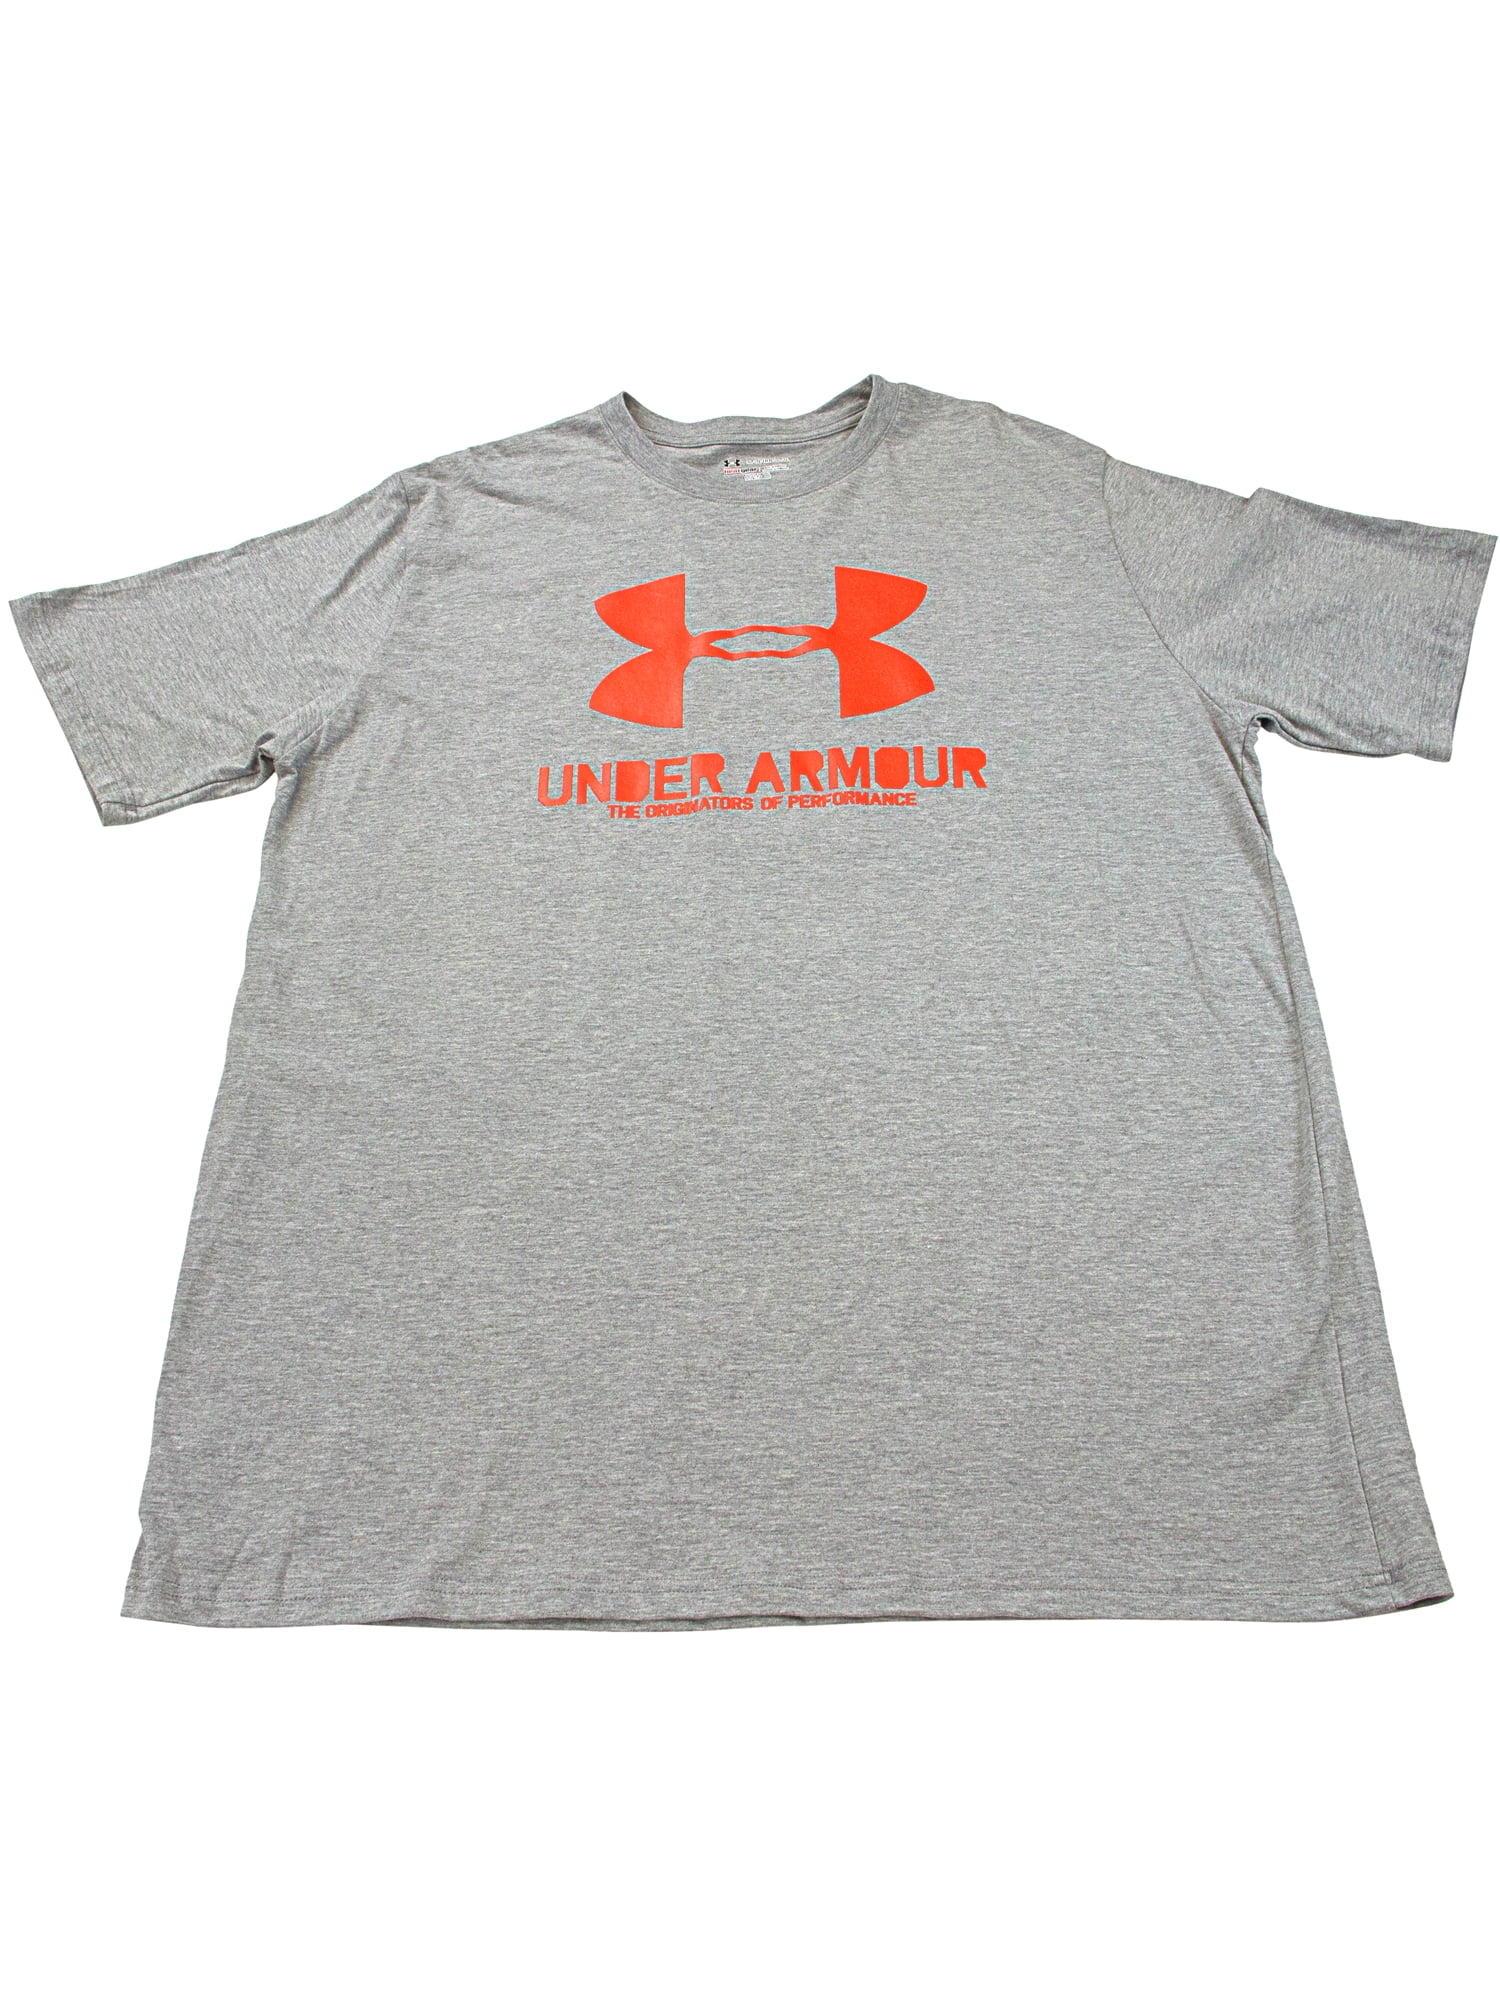 Under Armour Men's Grey / Orange Sportstyle Logo Tee Graphic T-Shirt ...